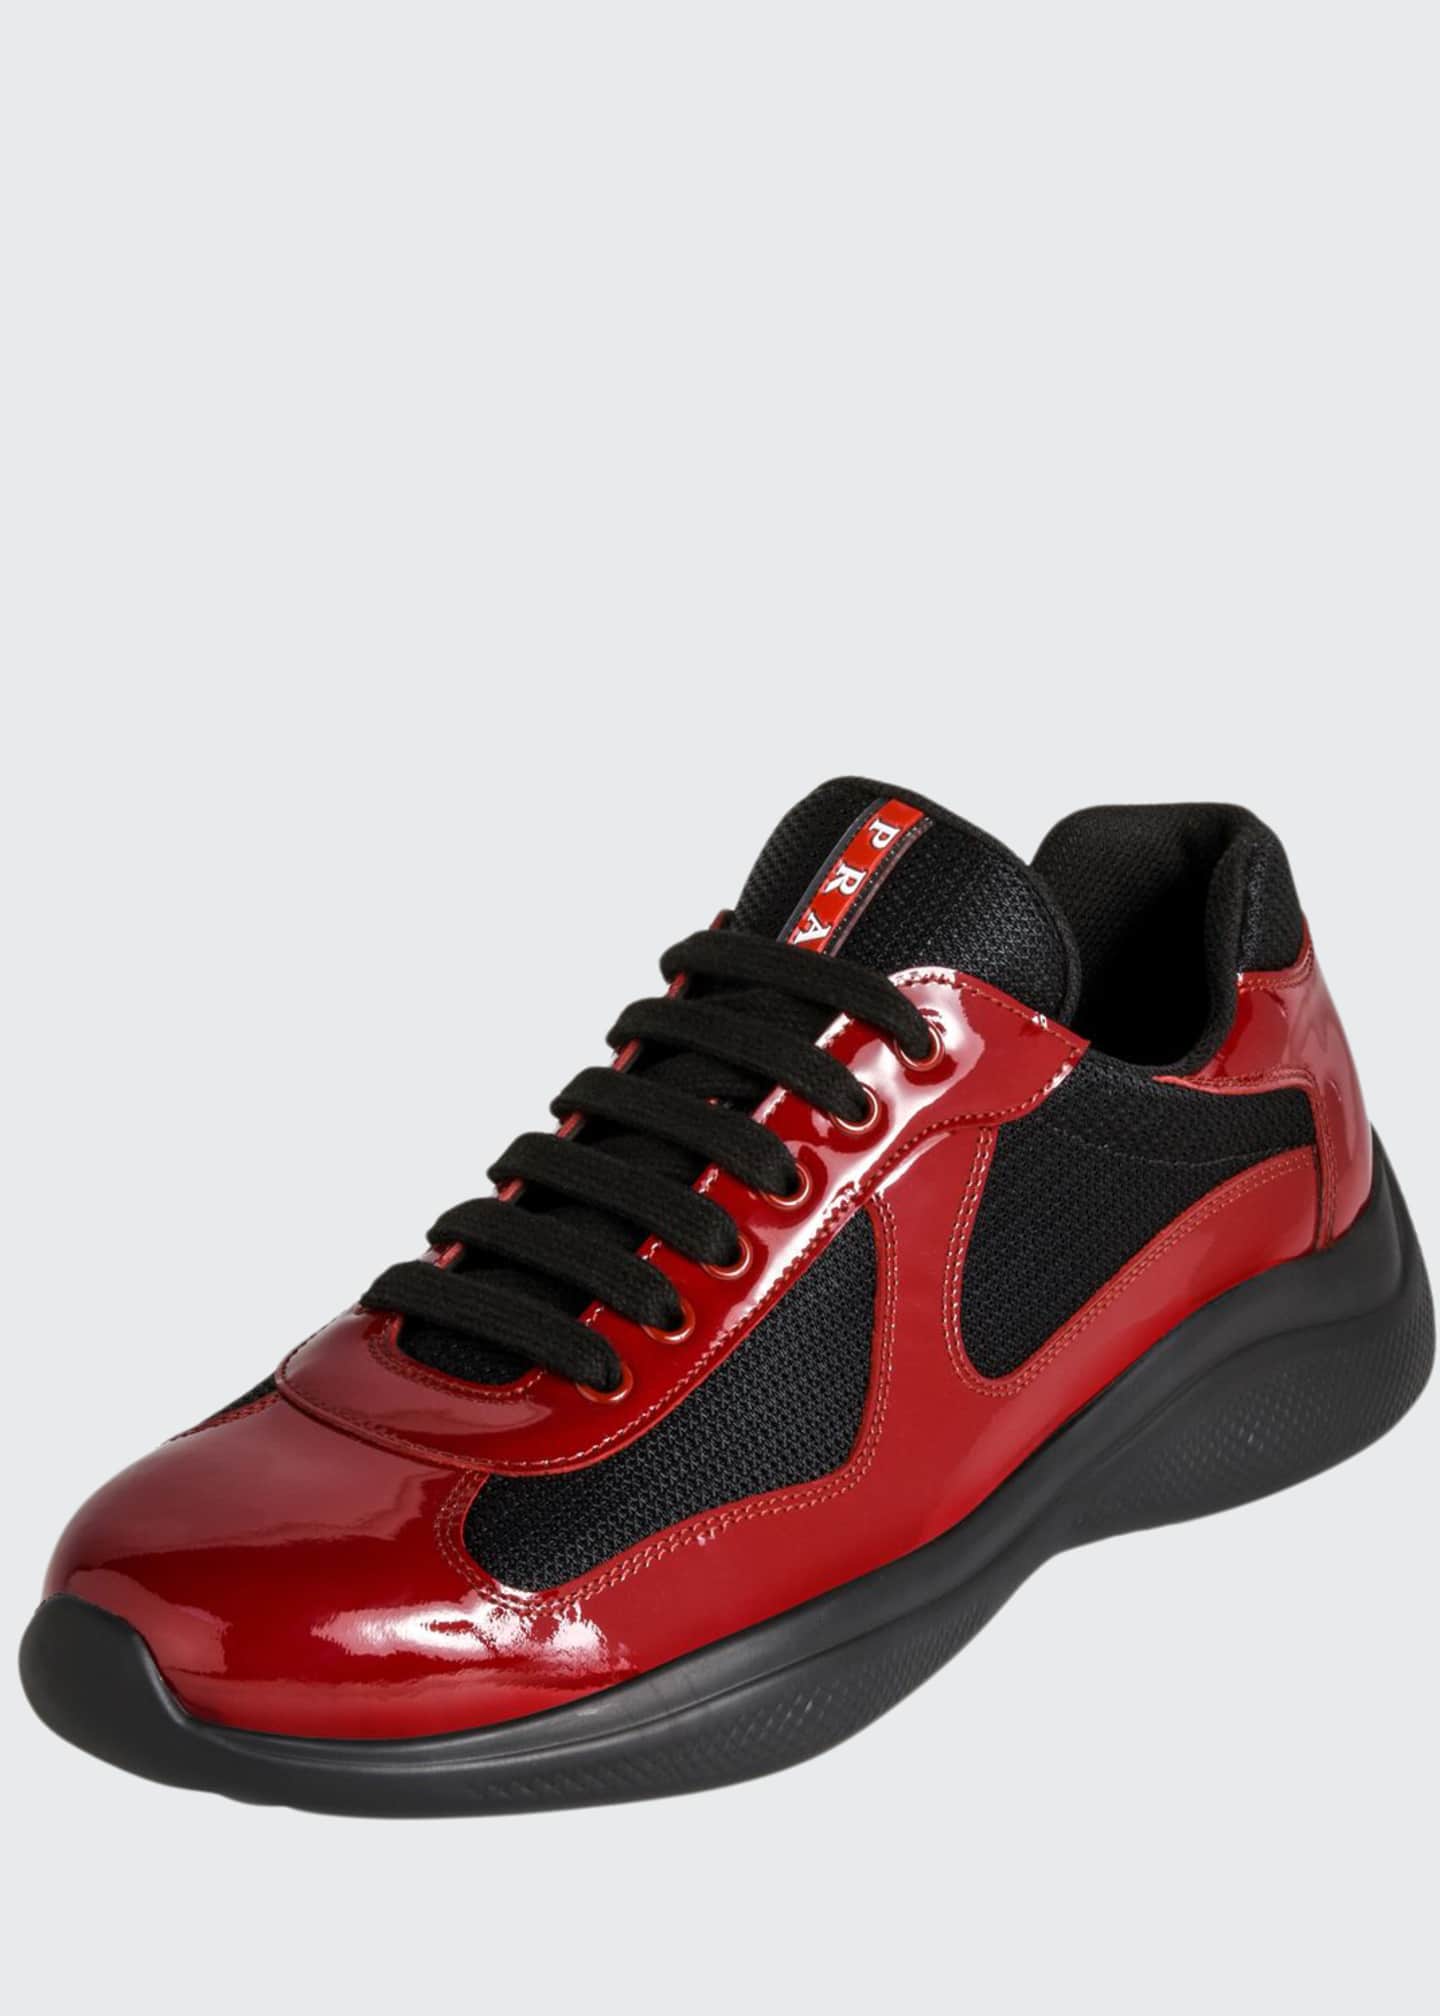 Prada Men's America's Cup Patent Leather Patchwork Sneakers - Bergdorf ...